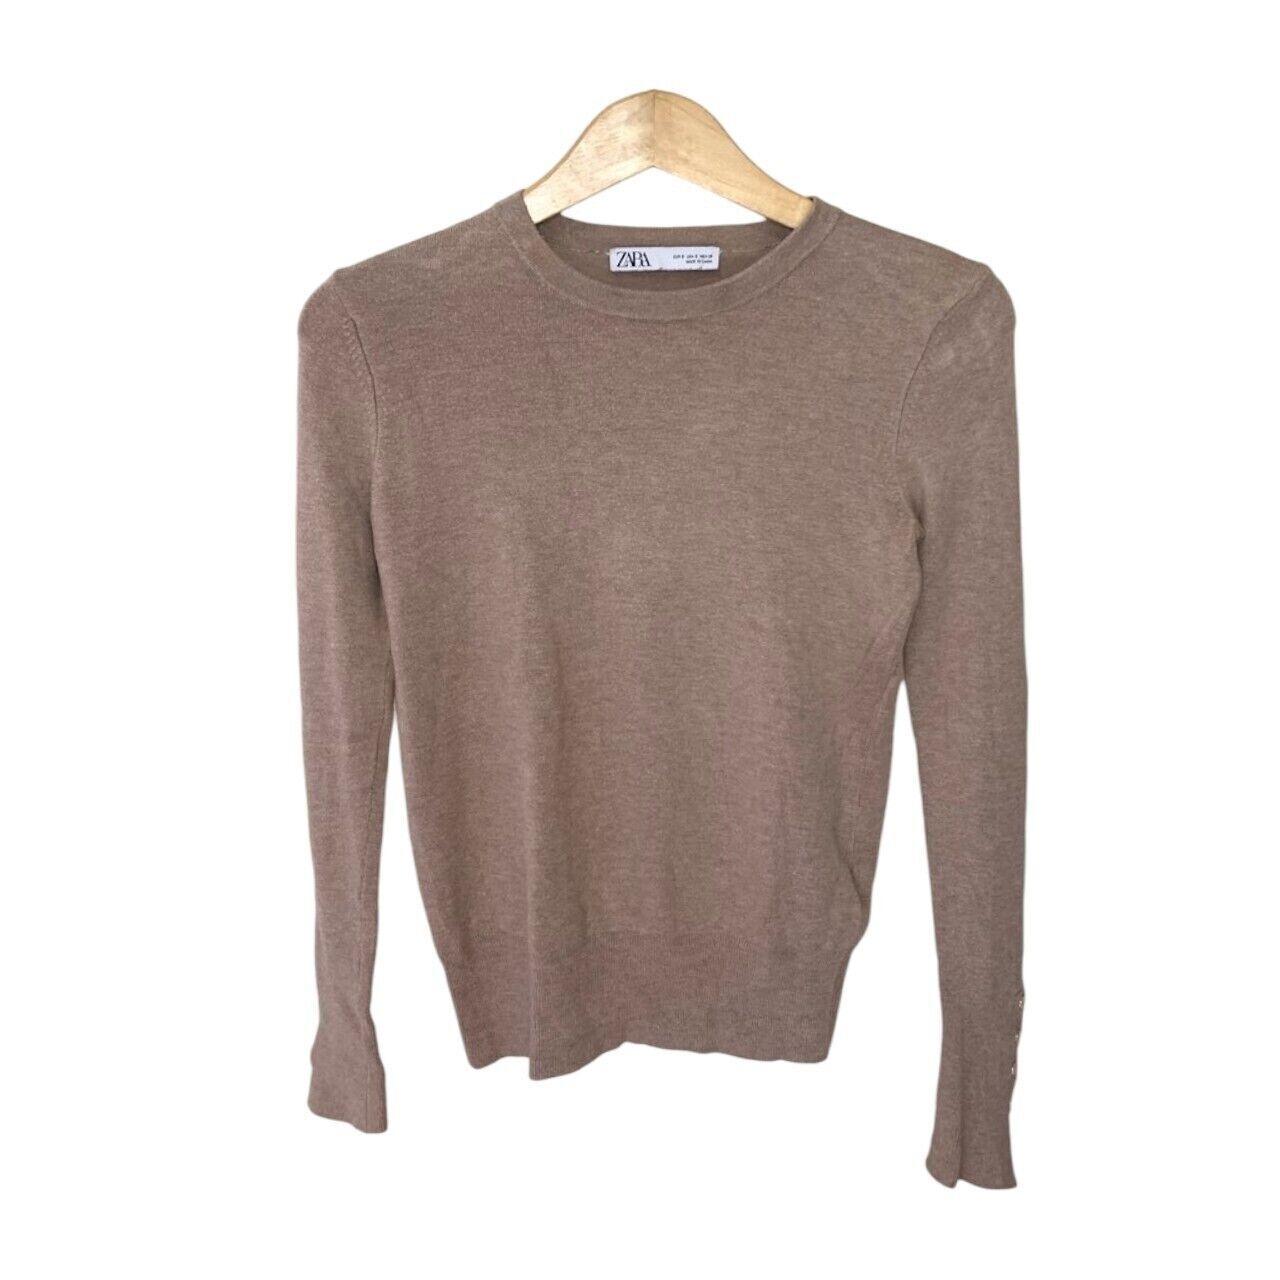 Zara Light Brown Sweater